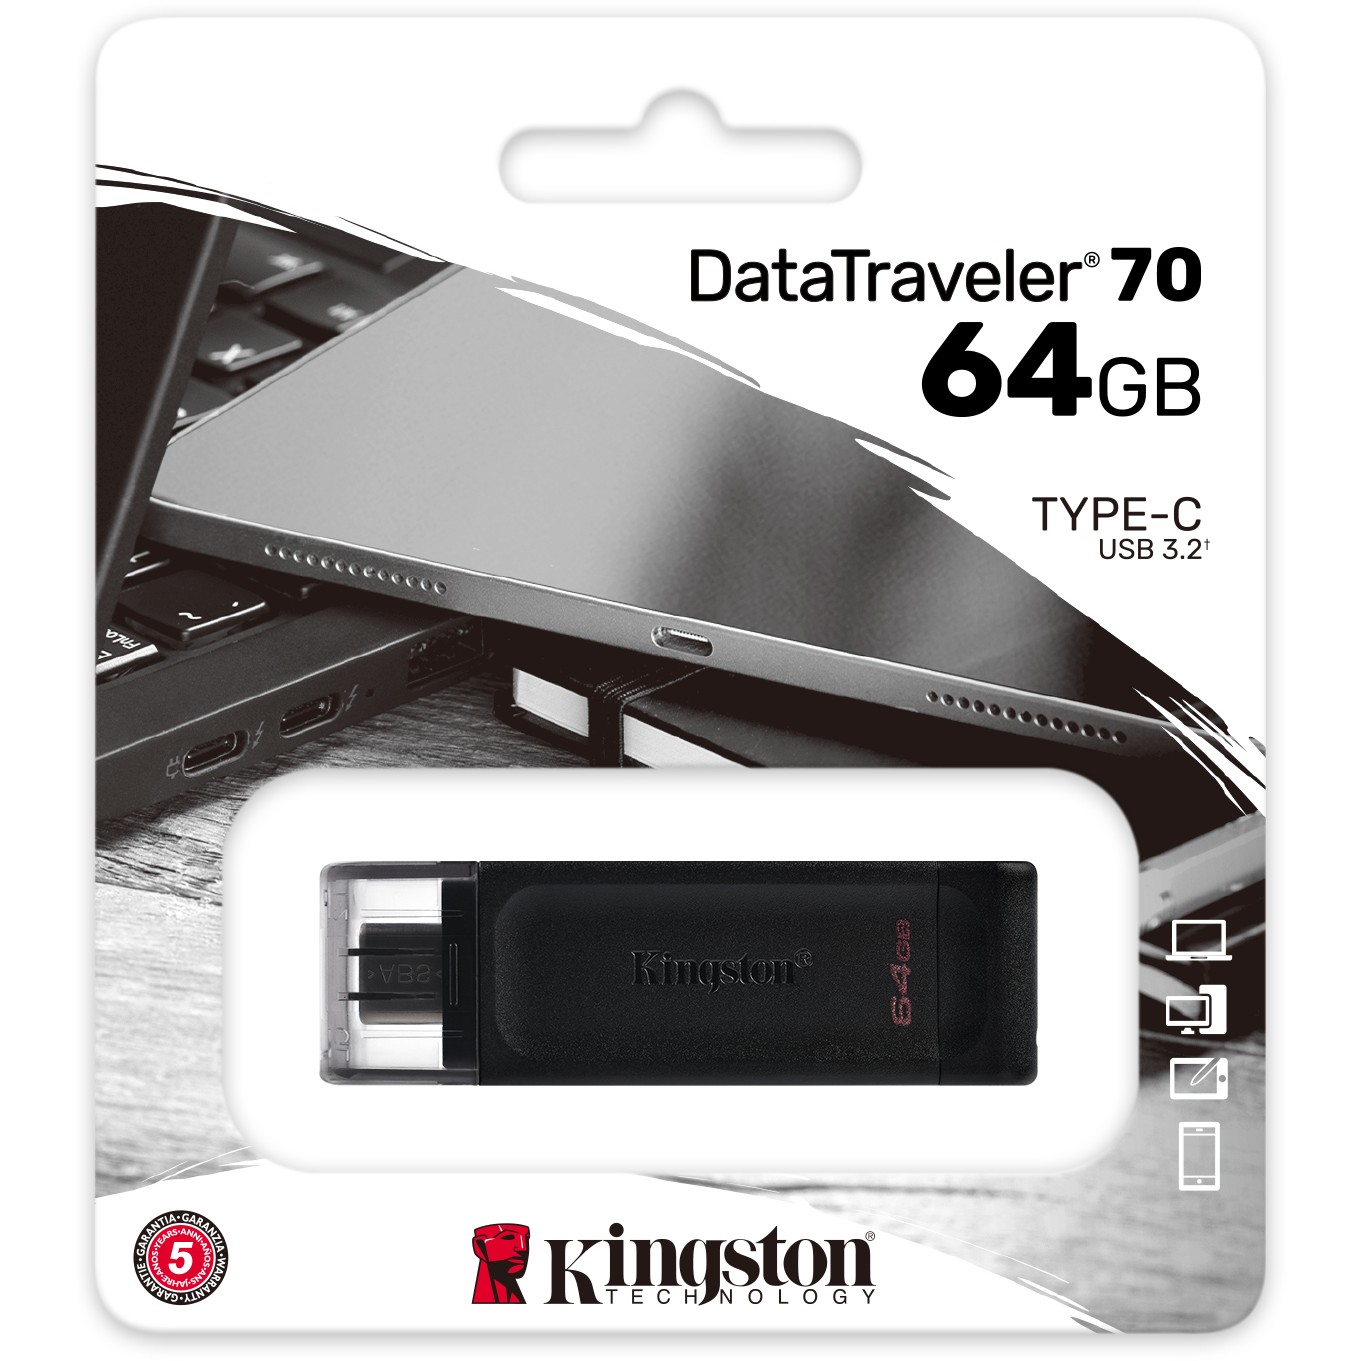 Kingston DT70/64GB, USB-Stick, Kingston Technology 70  (BILD6)